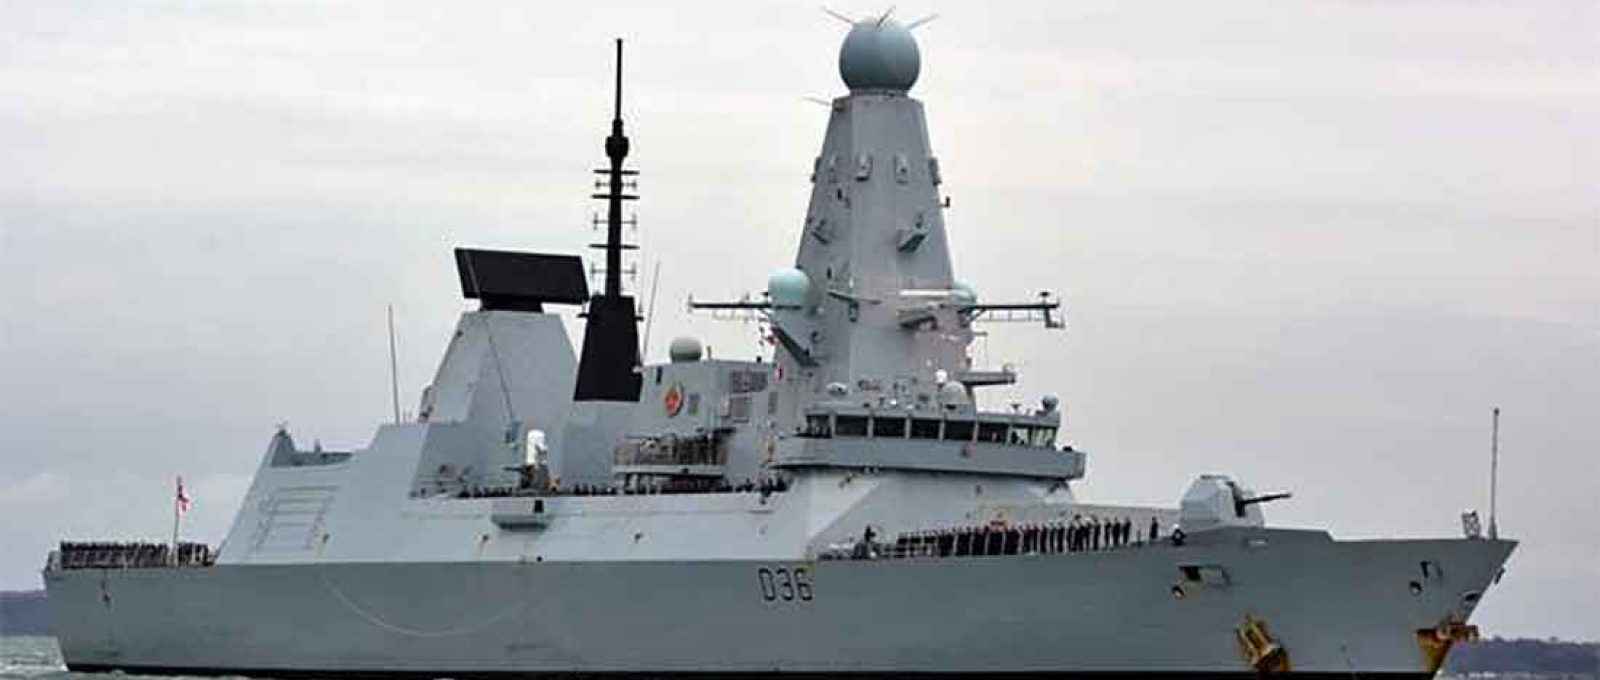 O destroier da Marinha Real Britânica HMS Defender (Foto: Ben Mitchell/AP).